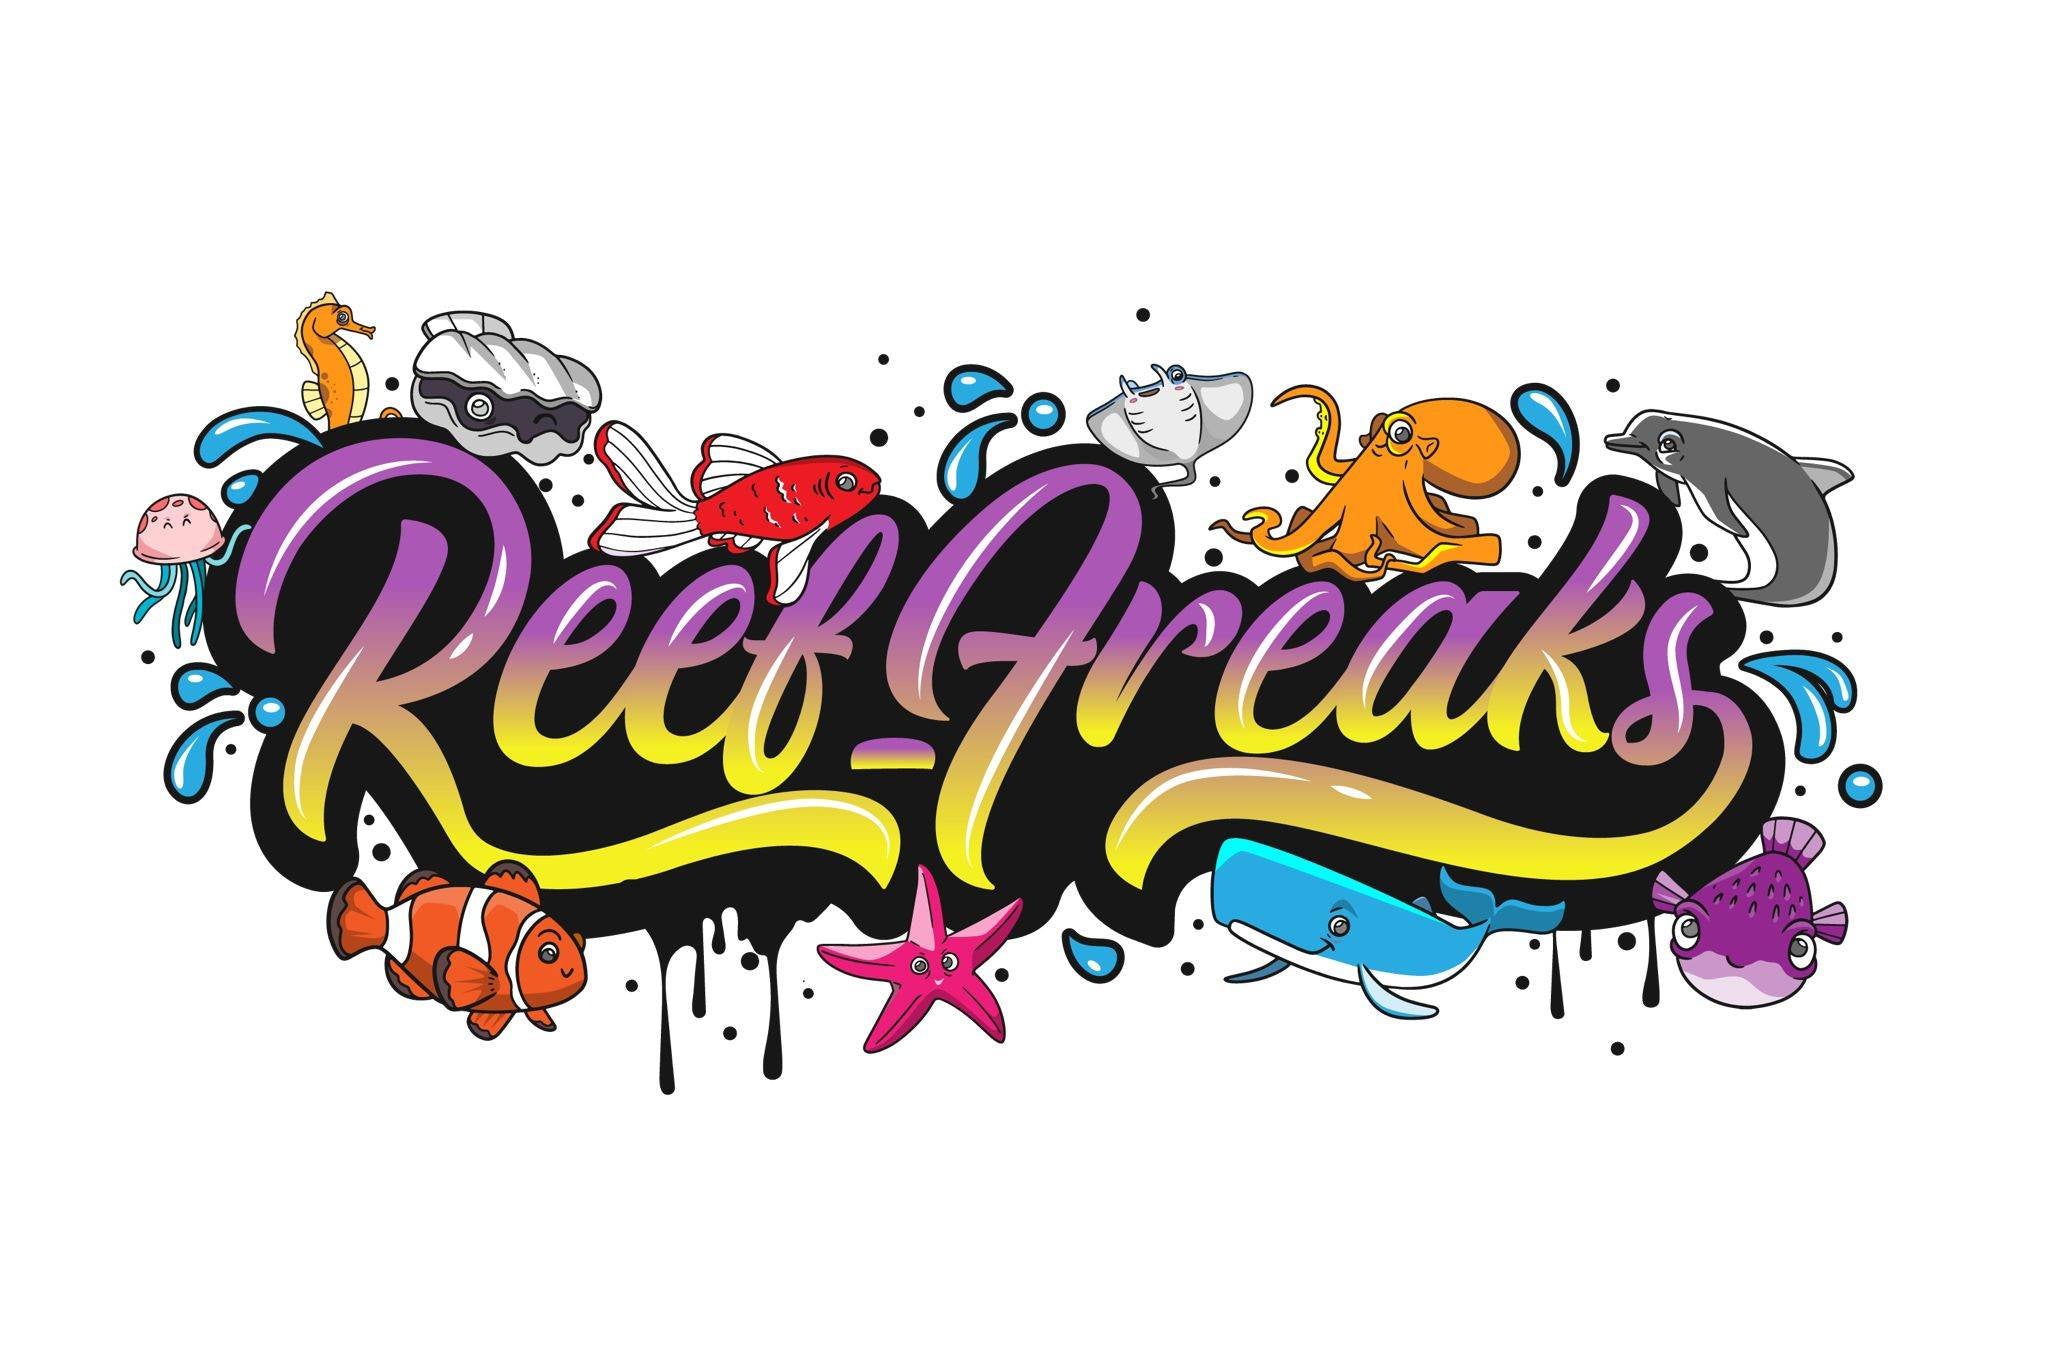 Reef-freaks